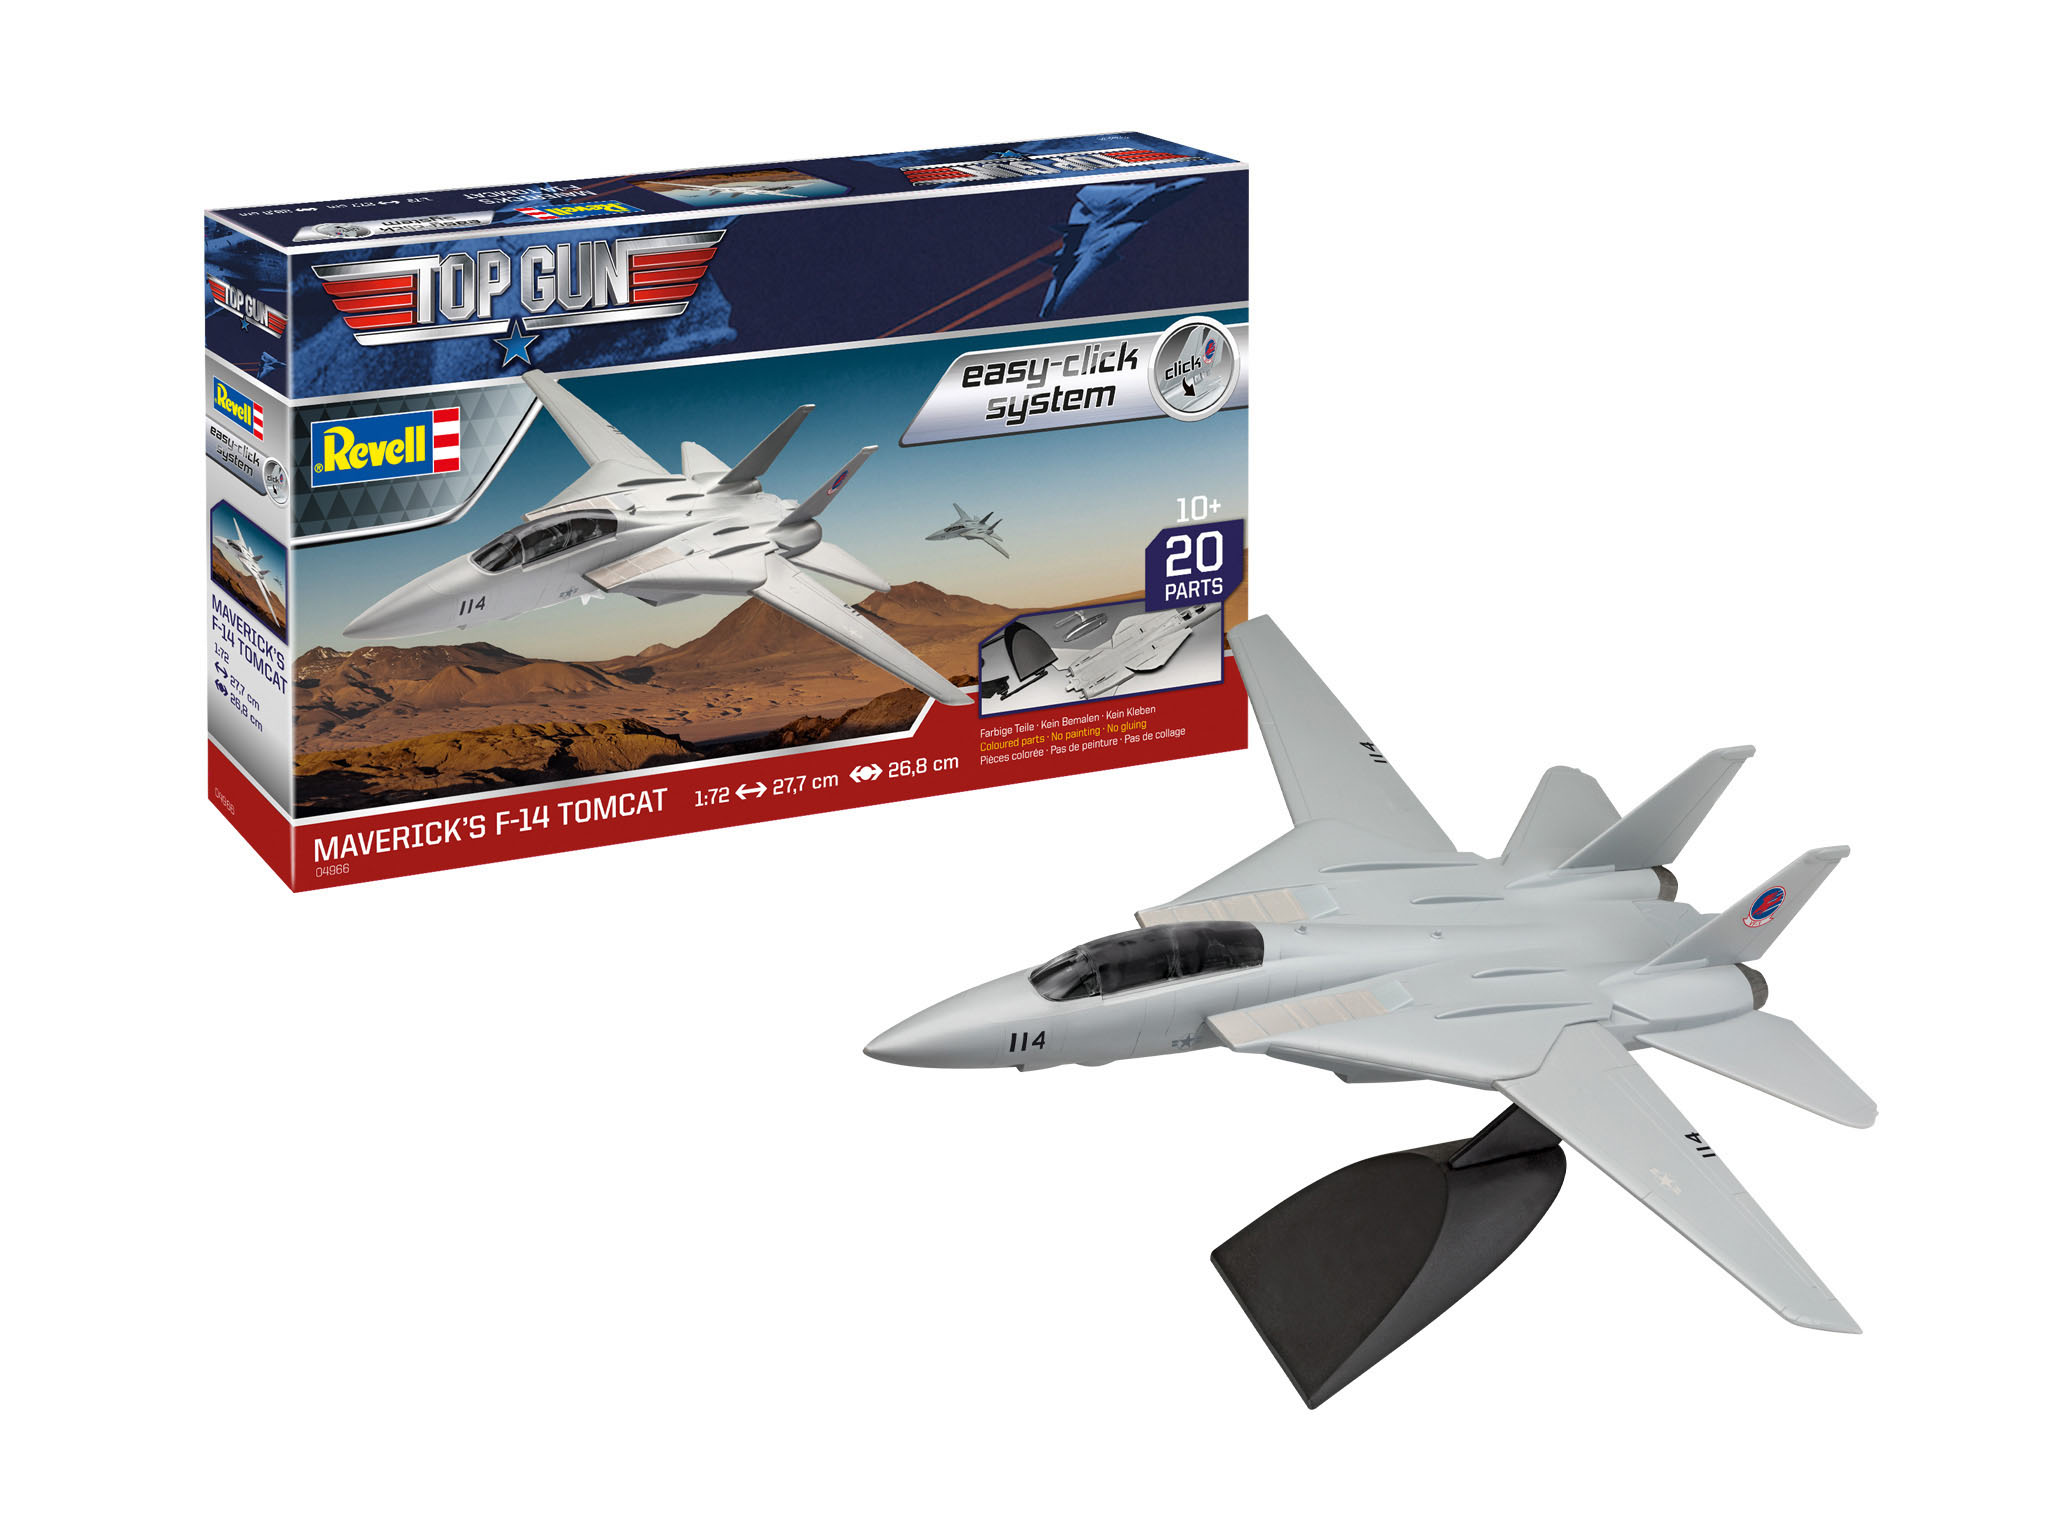 Revell 04966 Maverick's F-14 Tomcat ‘Top Gun’ easy-click